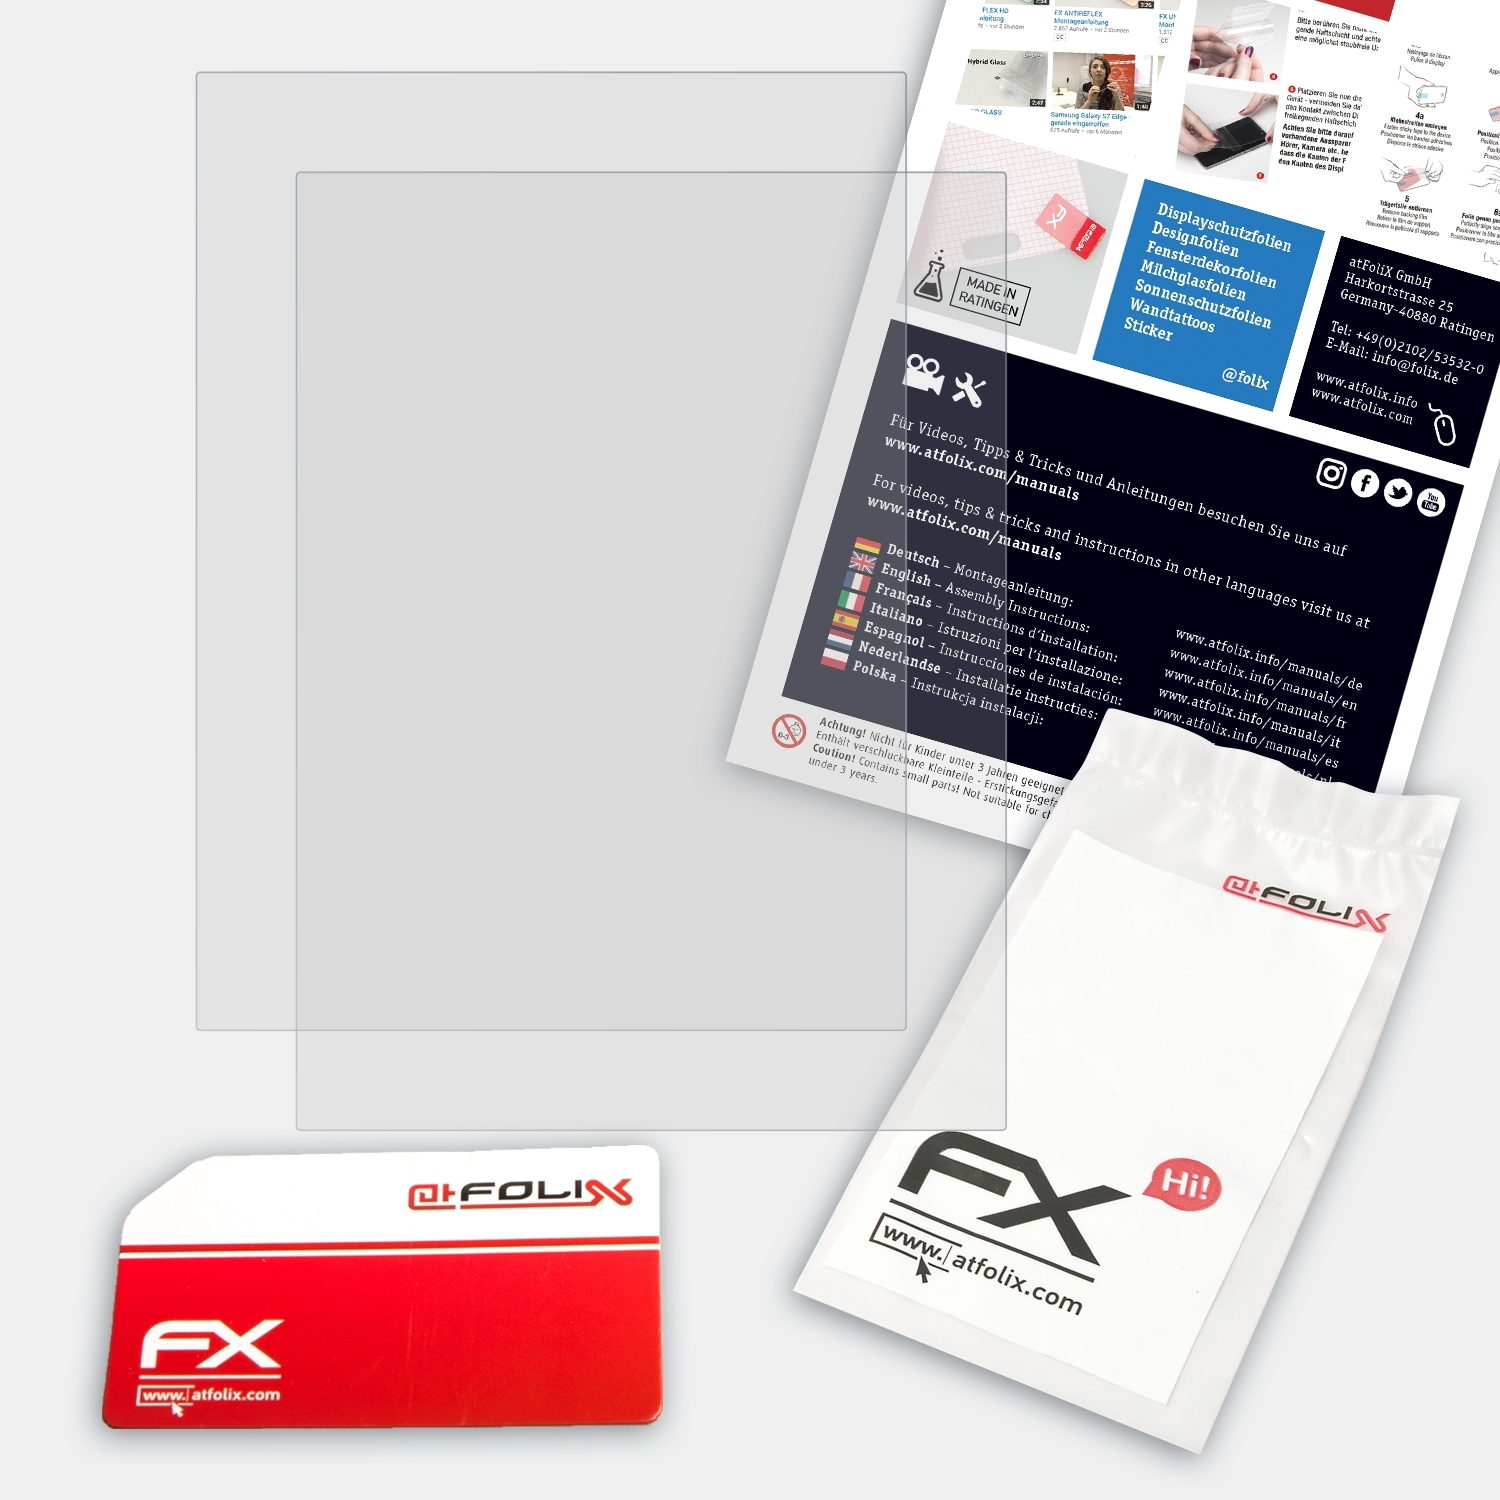 2011)) Amazon Displayschutz(für 4 Kindle (Model FX-Antireflex 2x ATFOLIX